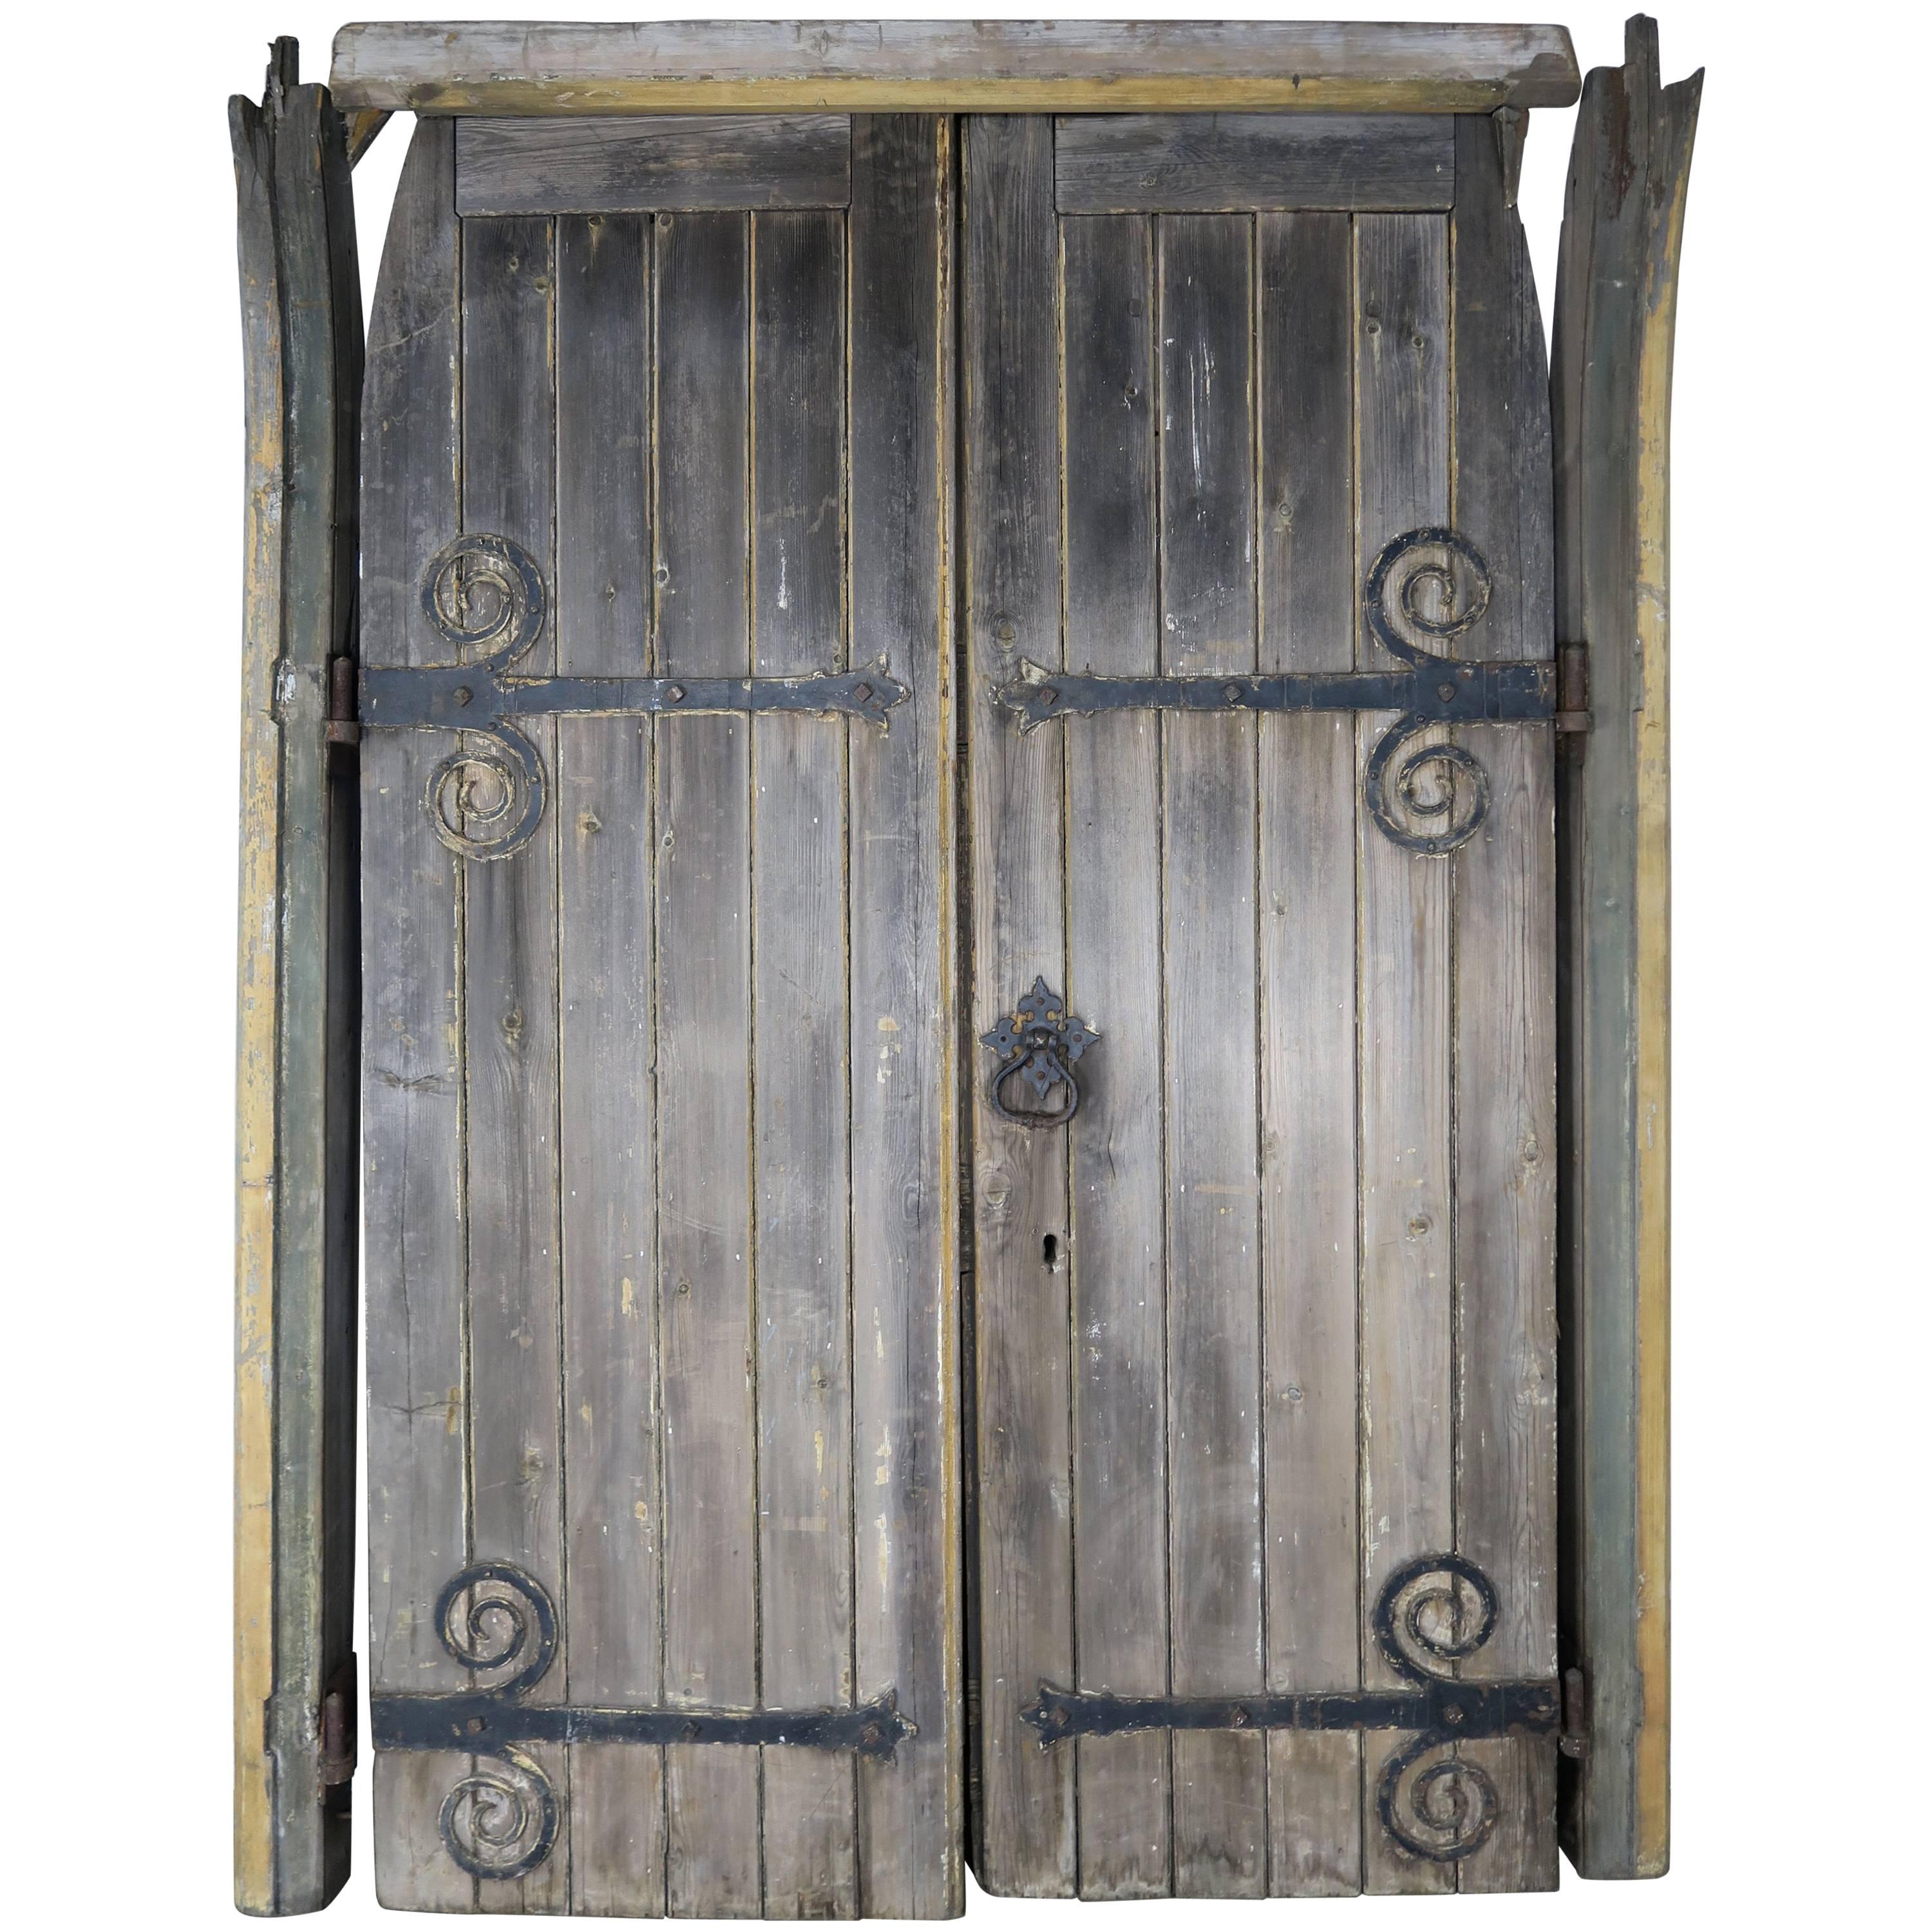 Pair of Monumental Spanish Barn Doors with Iron Hardware